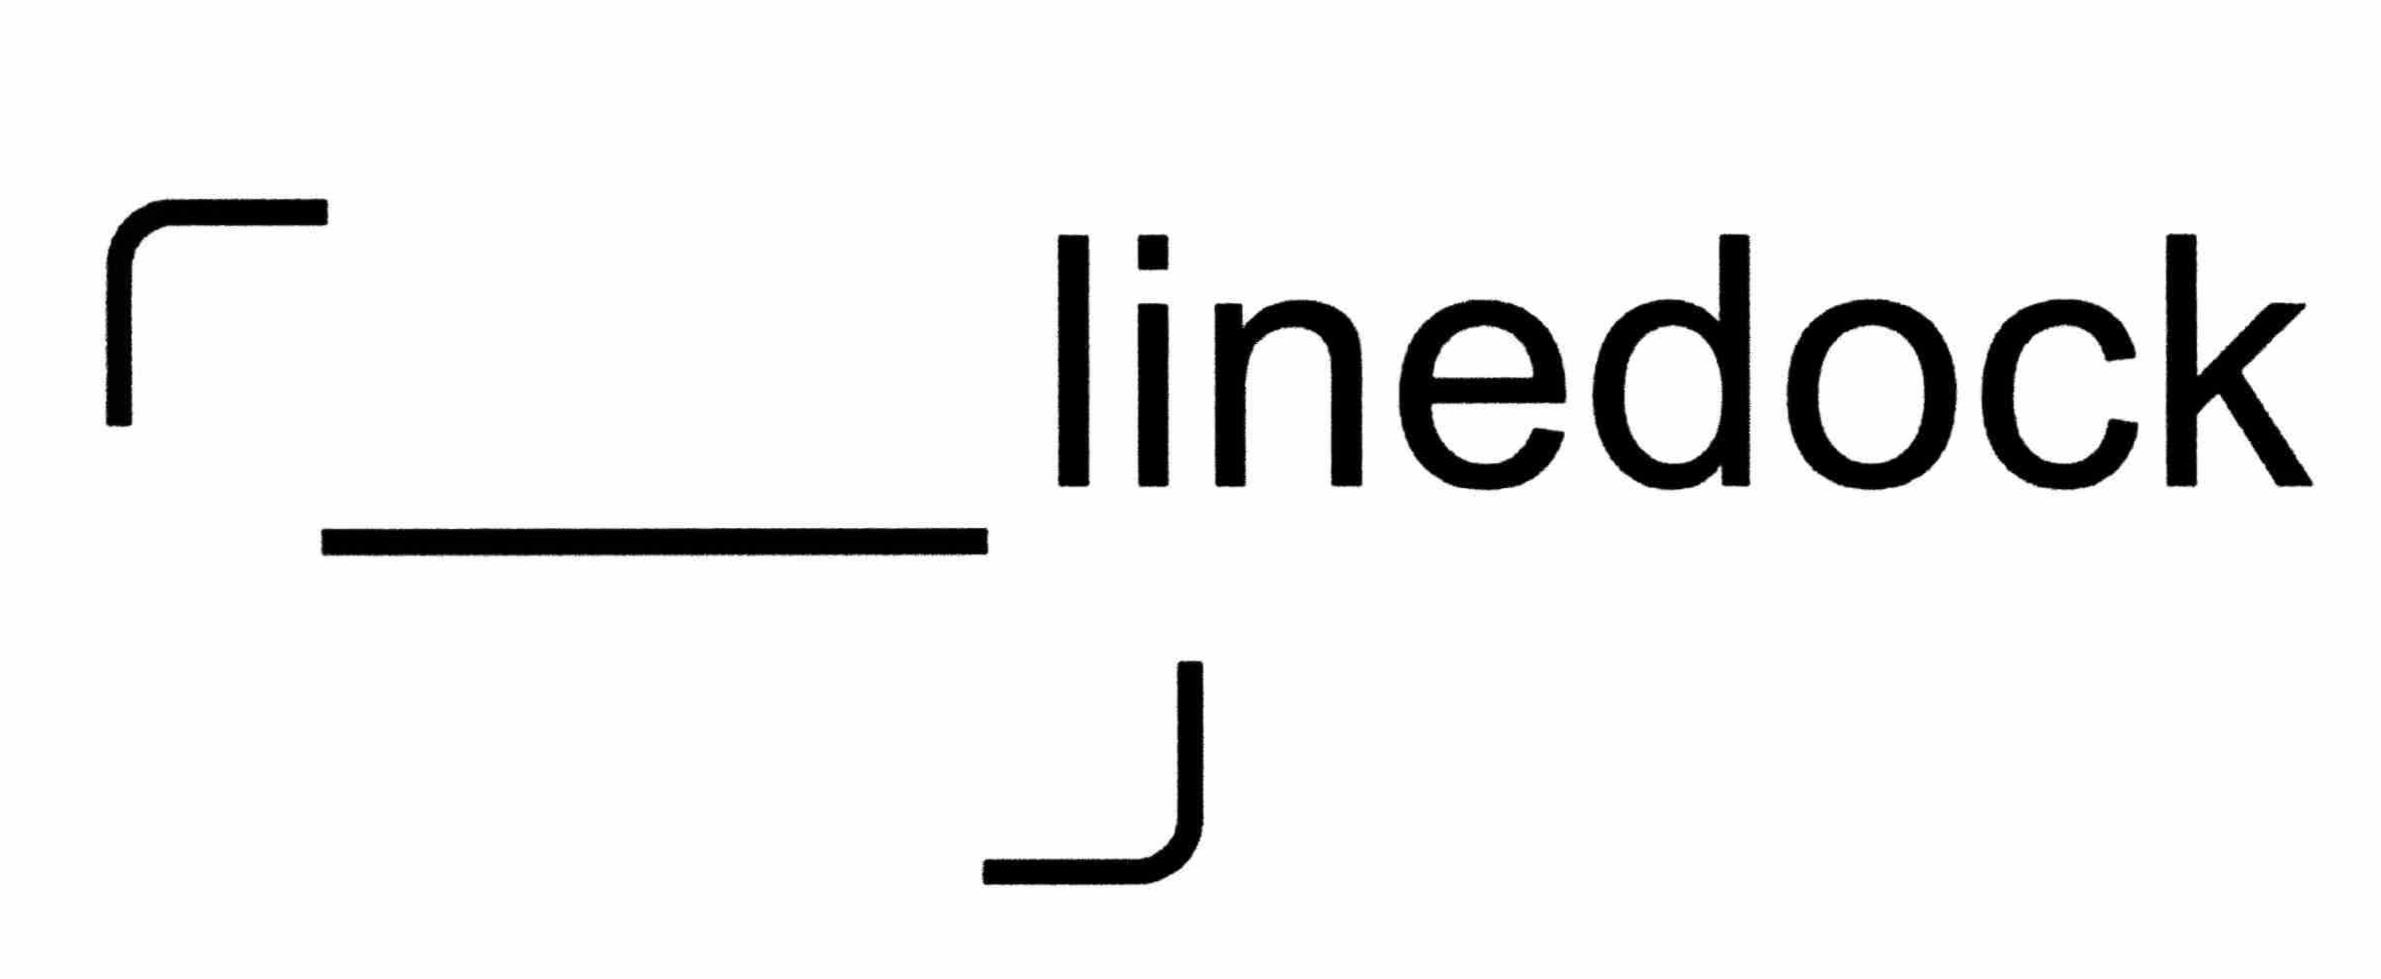 Trademark Logo LINEDOCK